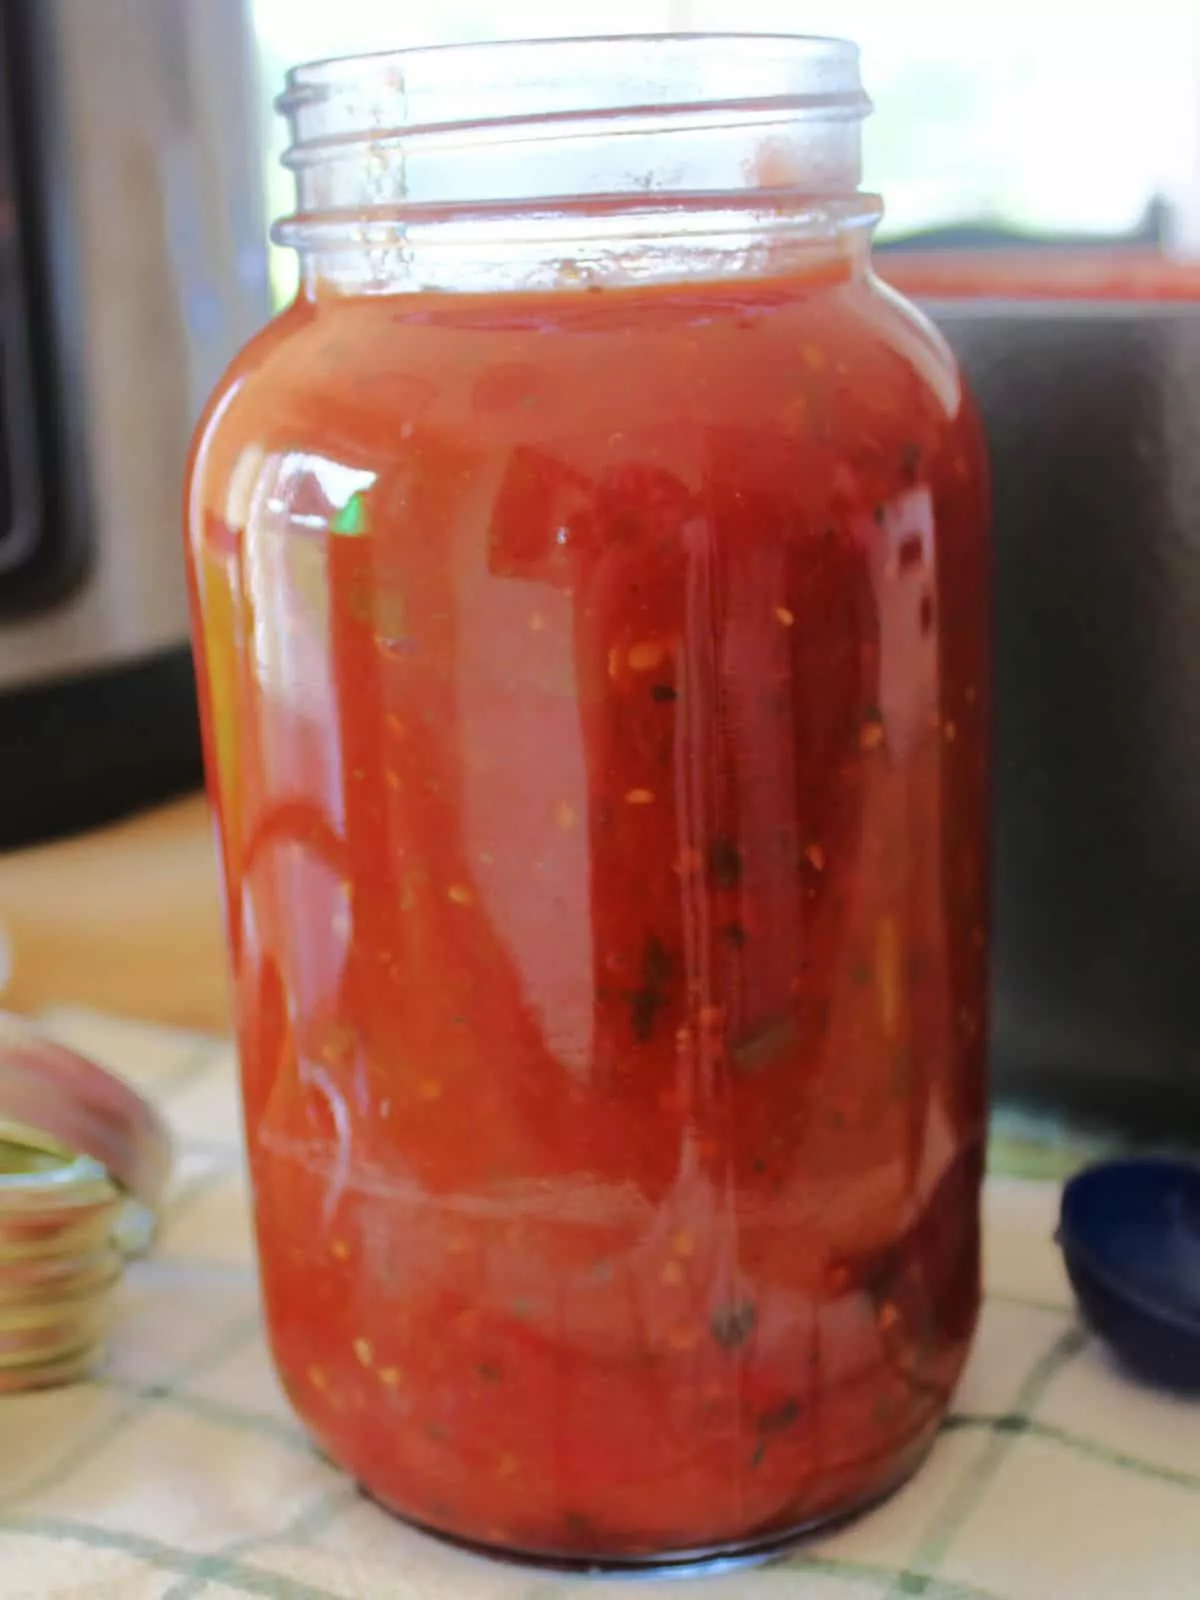 tomato sauce in mason jar.